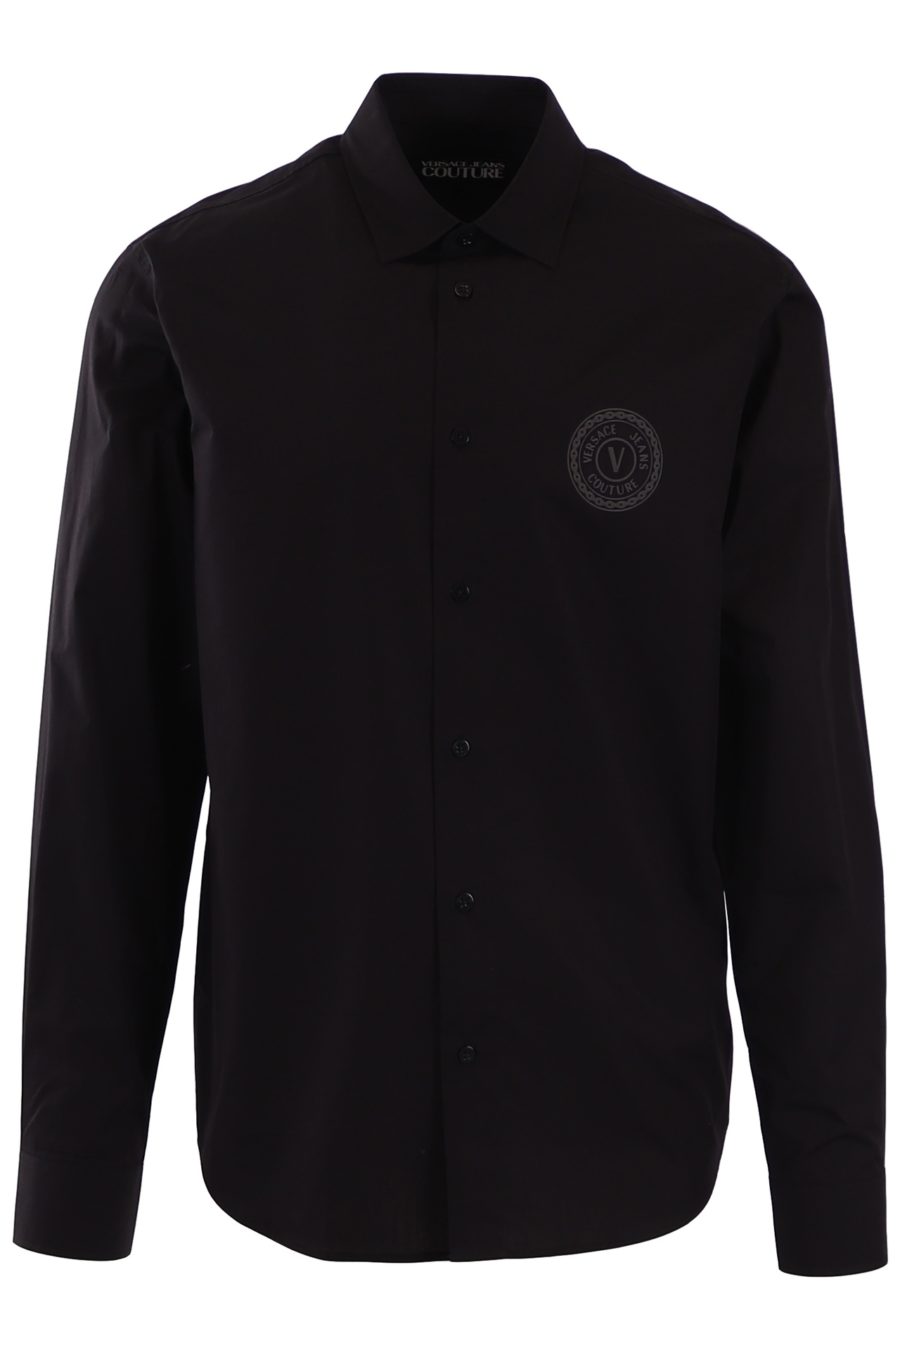 Camisa Versace Jeans Couture negra con logo gris - c0107878479242ba3f83137481e1c8ec34f430b3